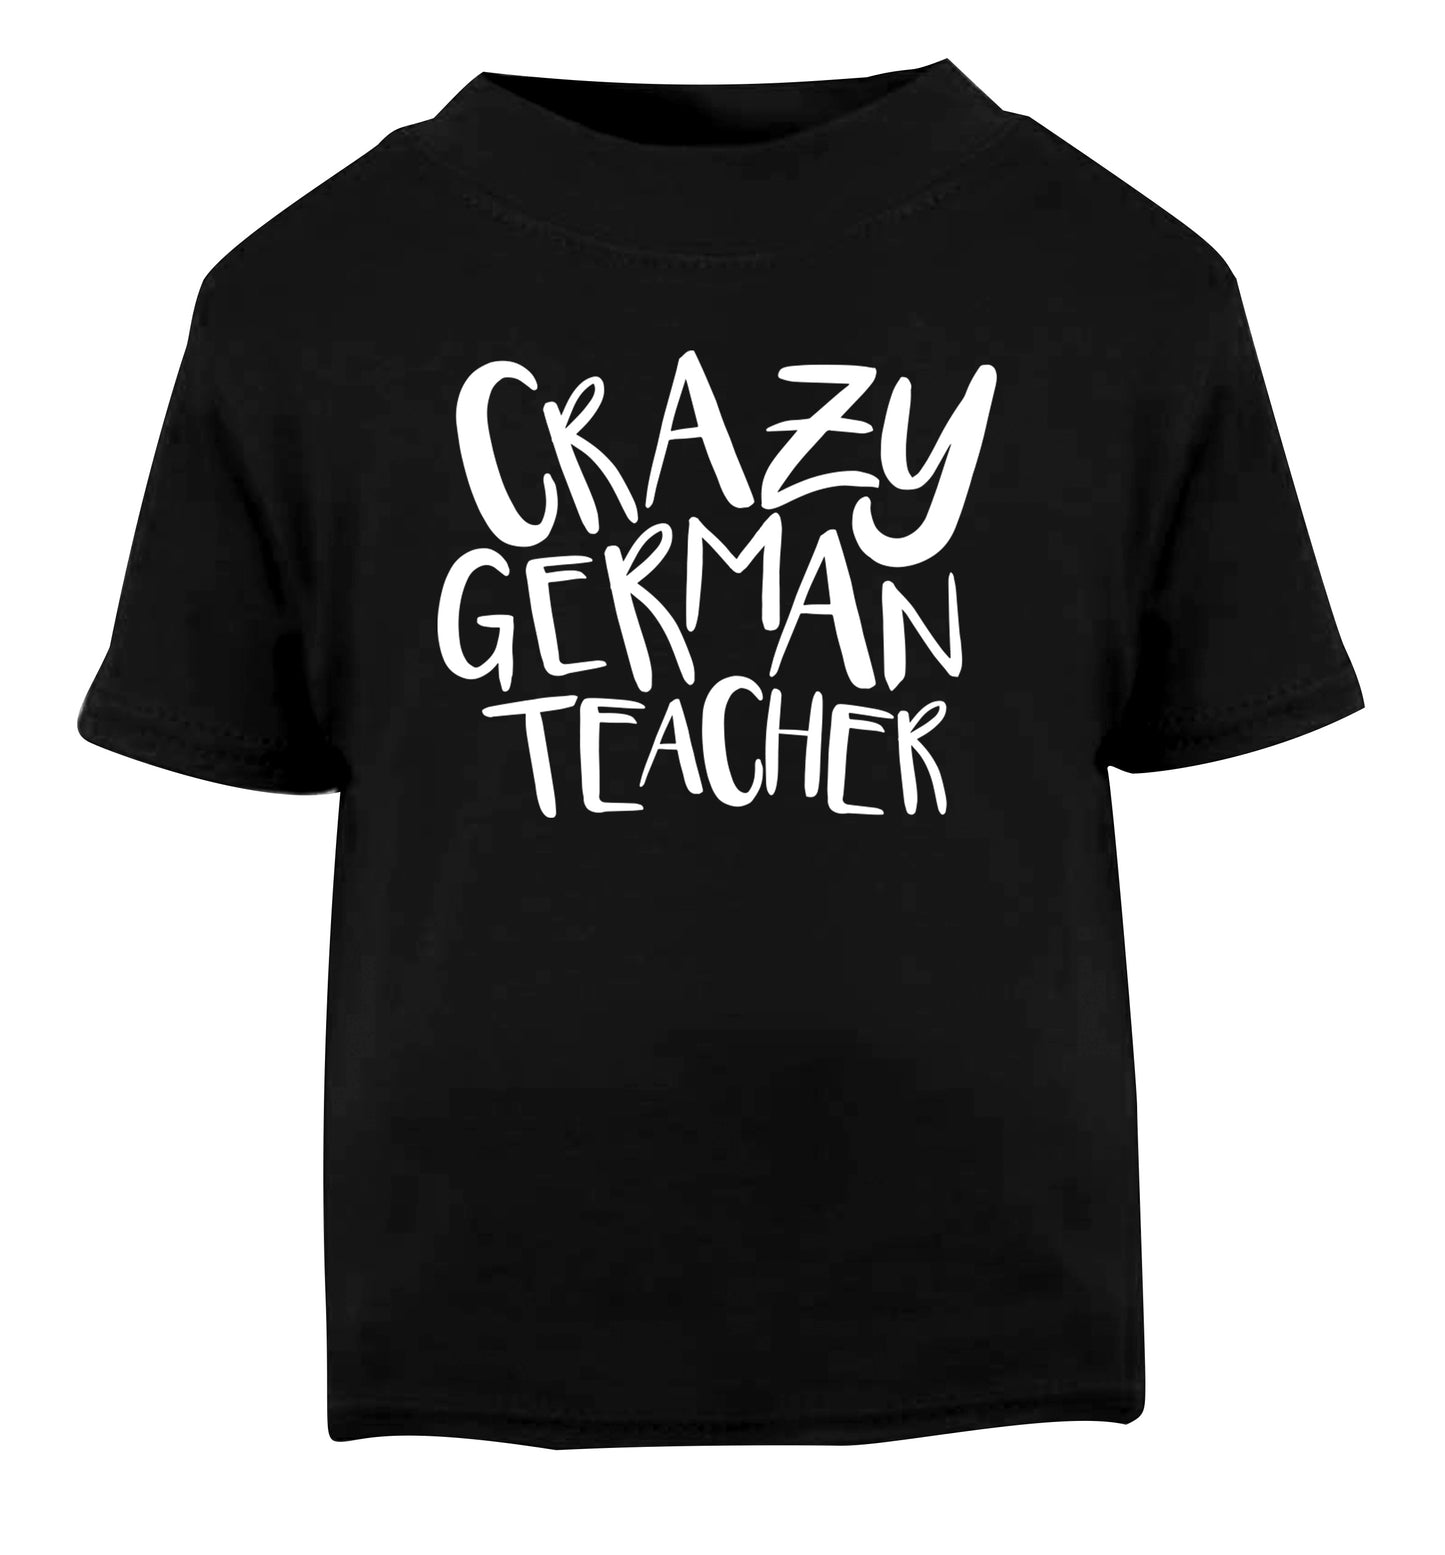 Crazy german teacher Black Baby Toddler Tshirt 2 years